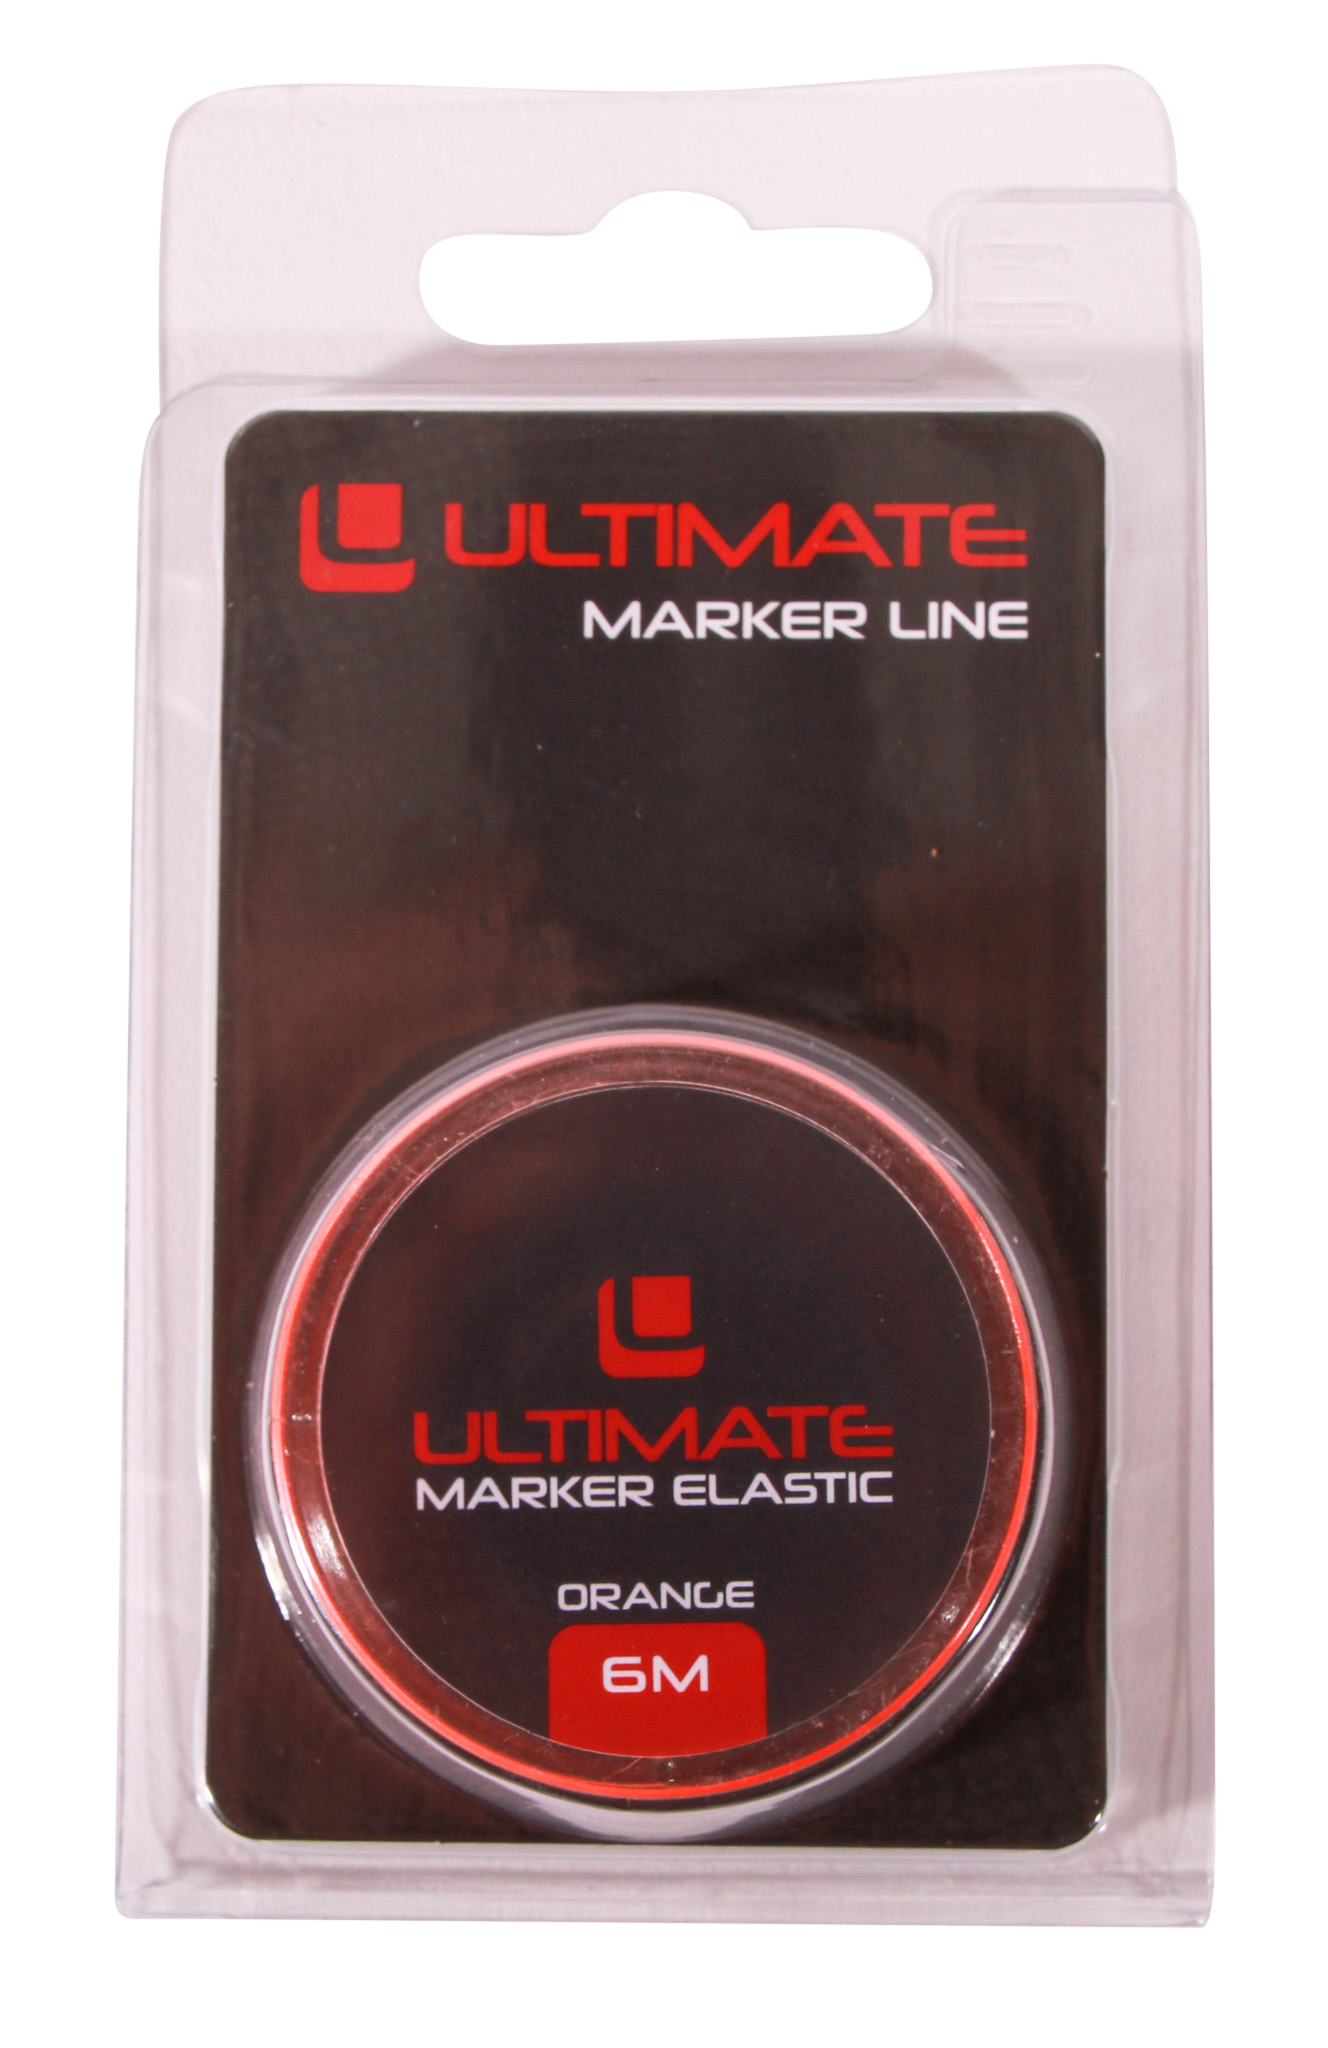 Ultimate Marker Elastic Orange (6m)